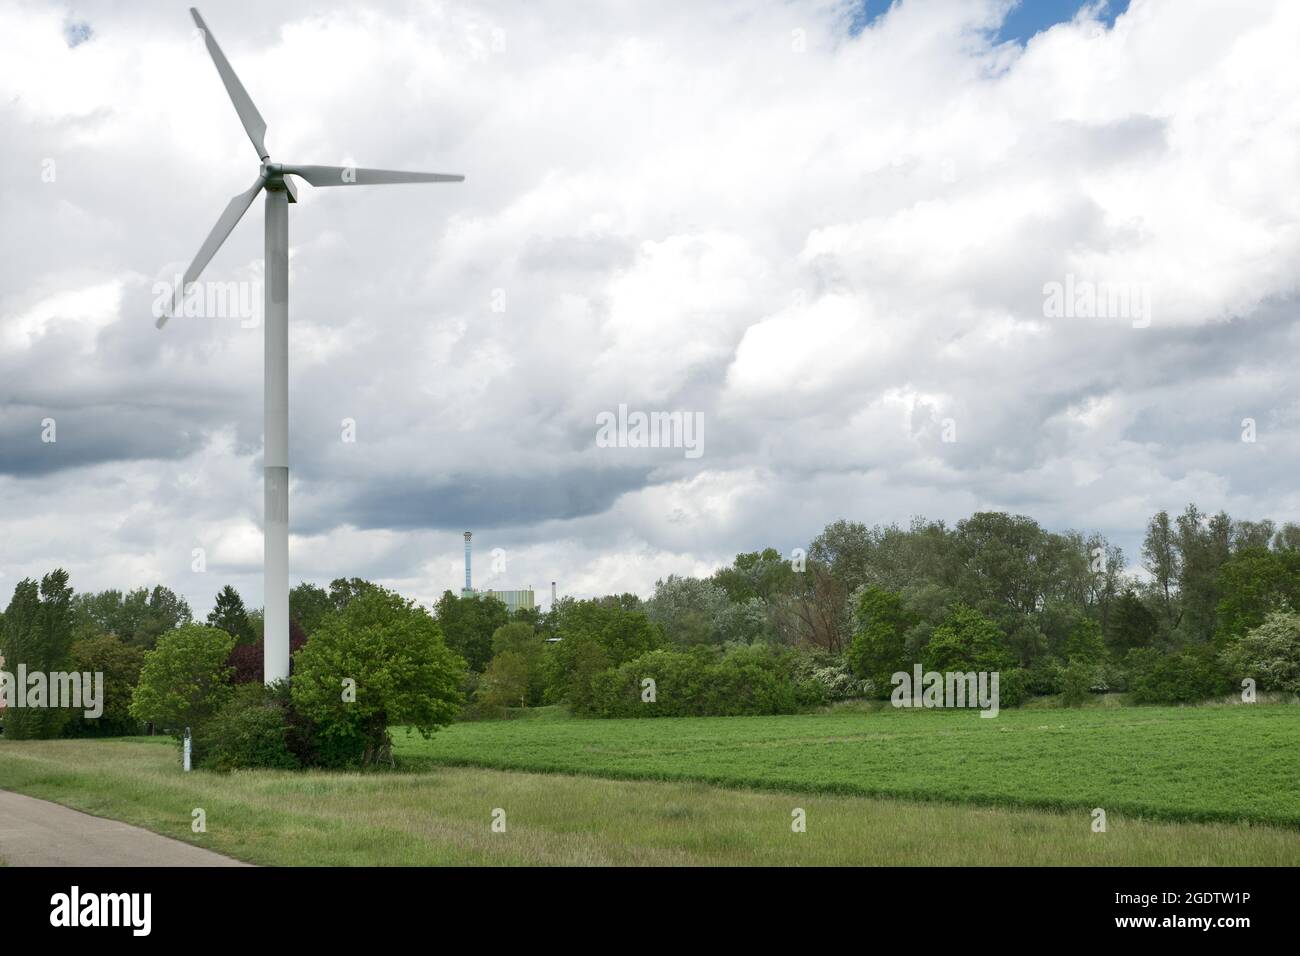 Karlsruhe, Maxau, Germany: Wind turbine with thunderstorm sky and green landscape Stock Photo